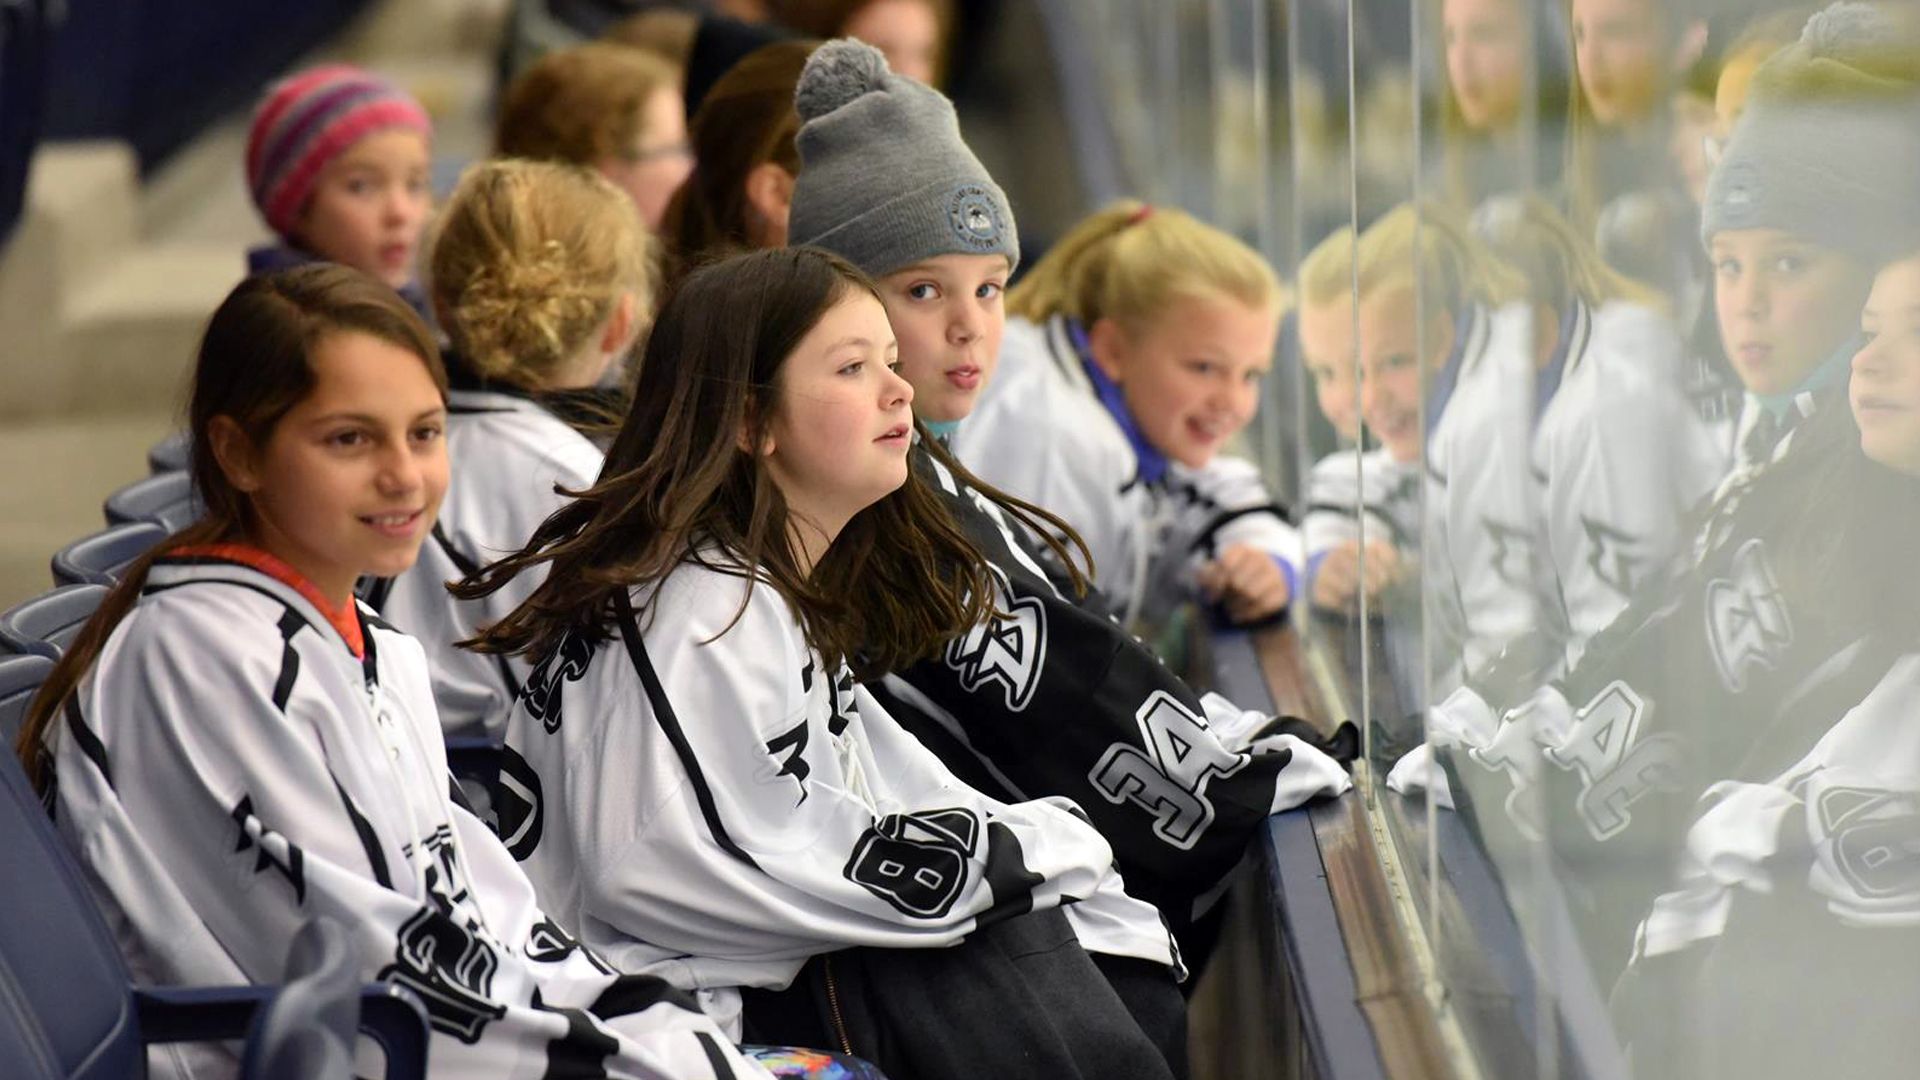 Women's Hockey to Host Girls Hockey Camps in September Canton Athletics